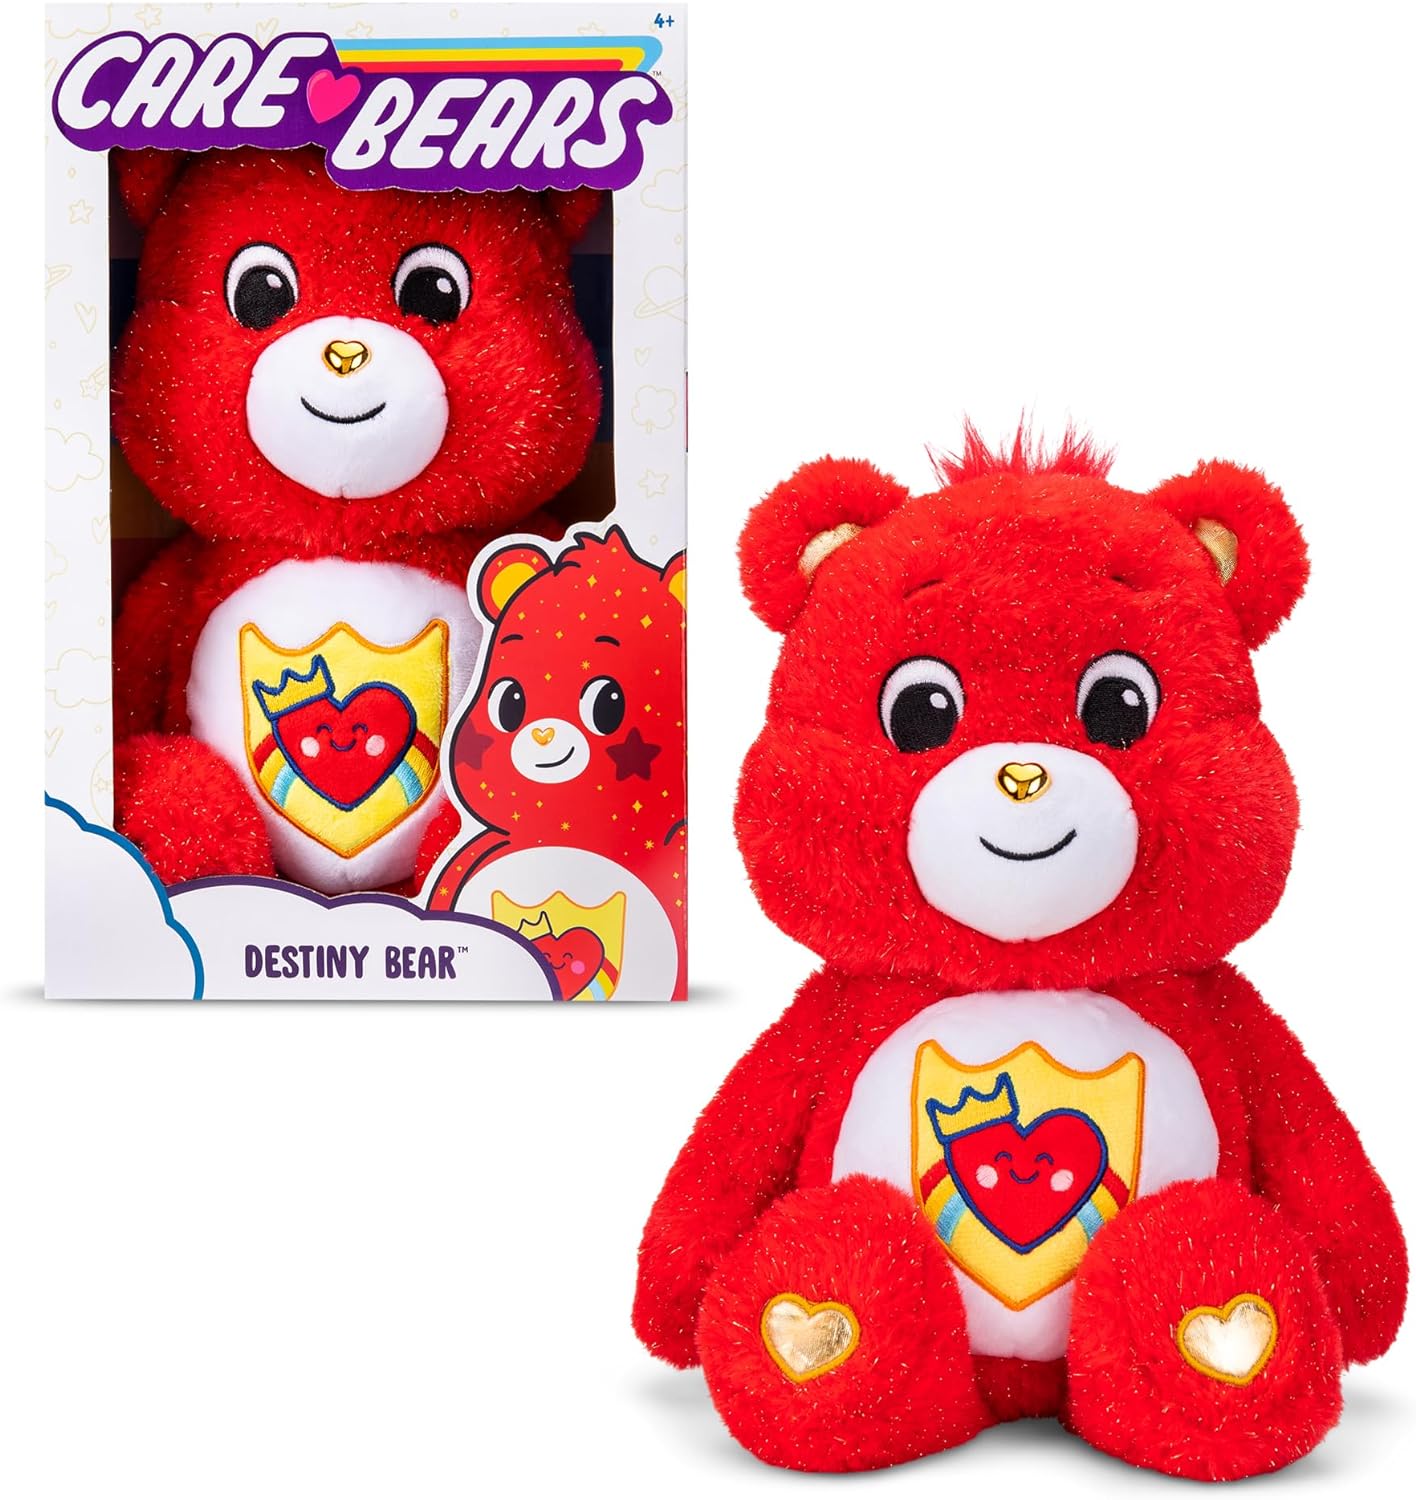 Care Bears DESTINY BEAR 35cm Medium Soft Plush Toy